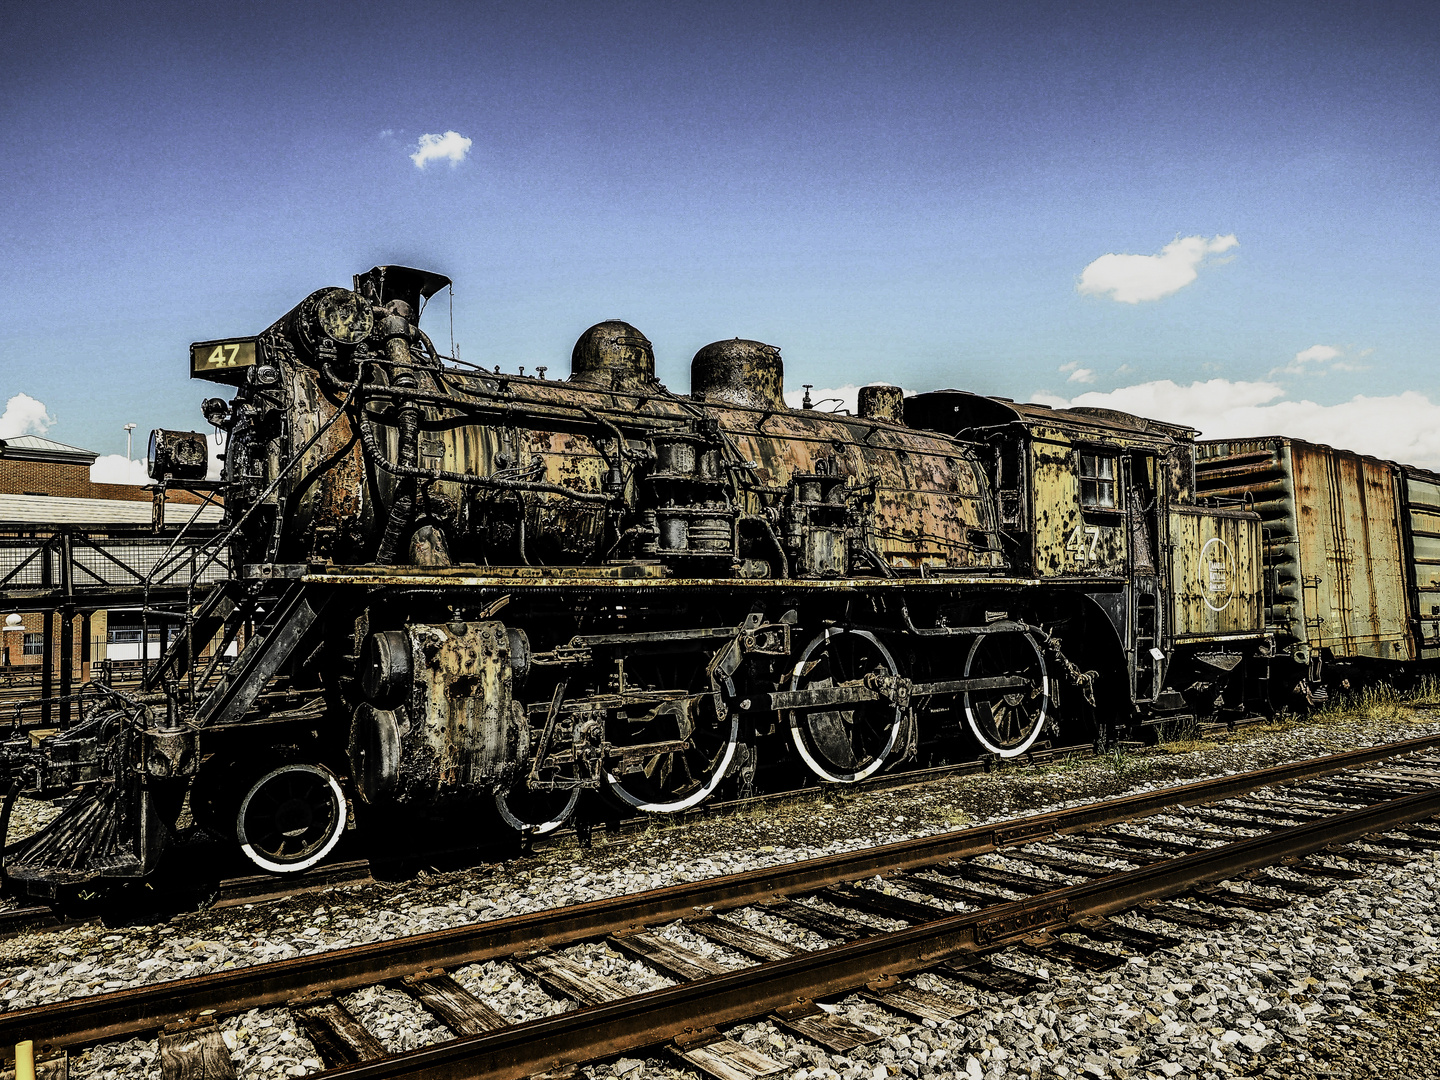 The old #47 Steam Locomotive